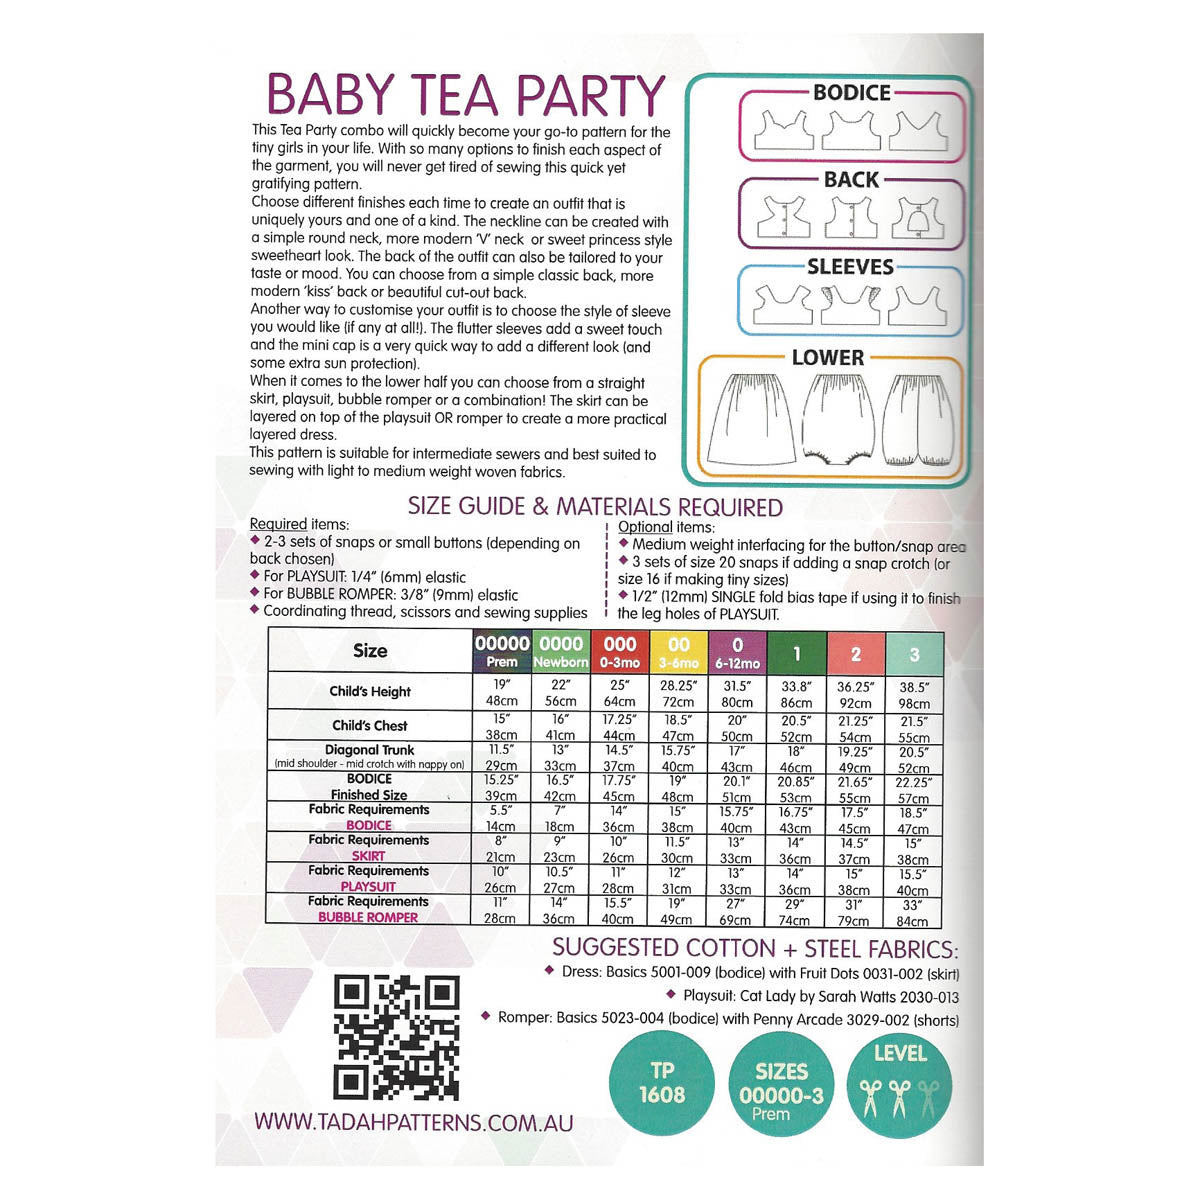 TADAH - BABY TEA PARTY - Dress, Playsuit, Skirt, Bubble Romper -Size 00000(Prem) - 3 Years